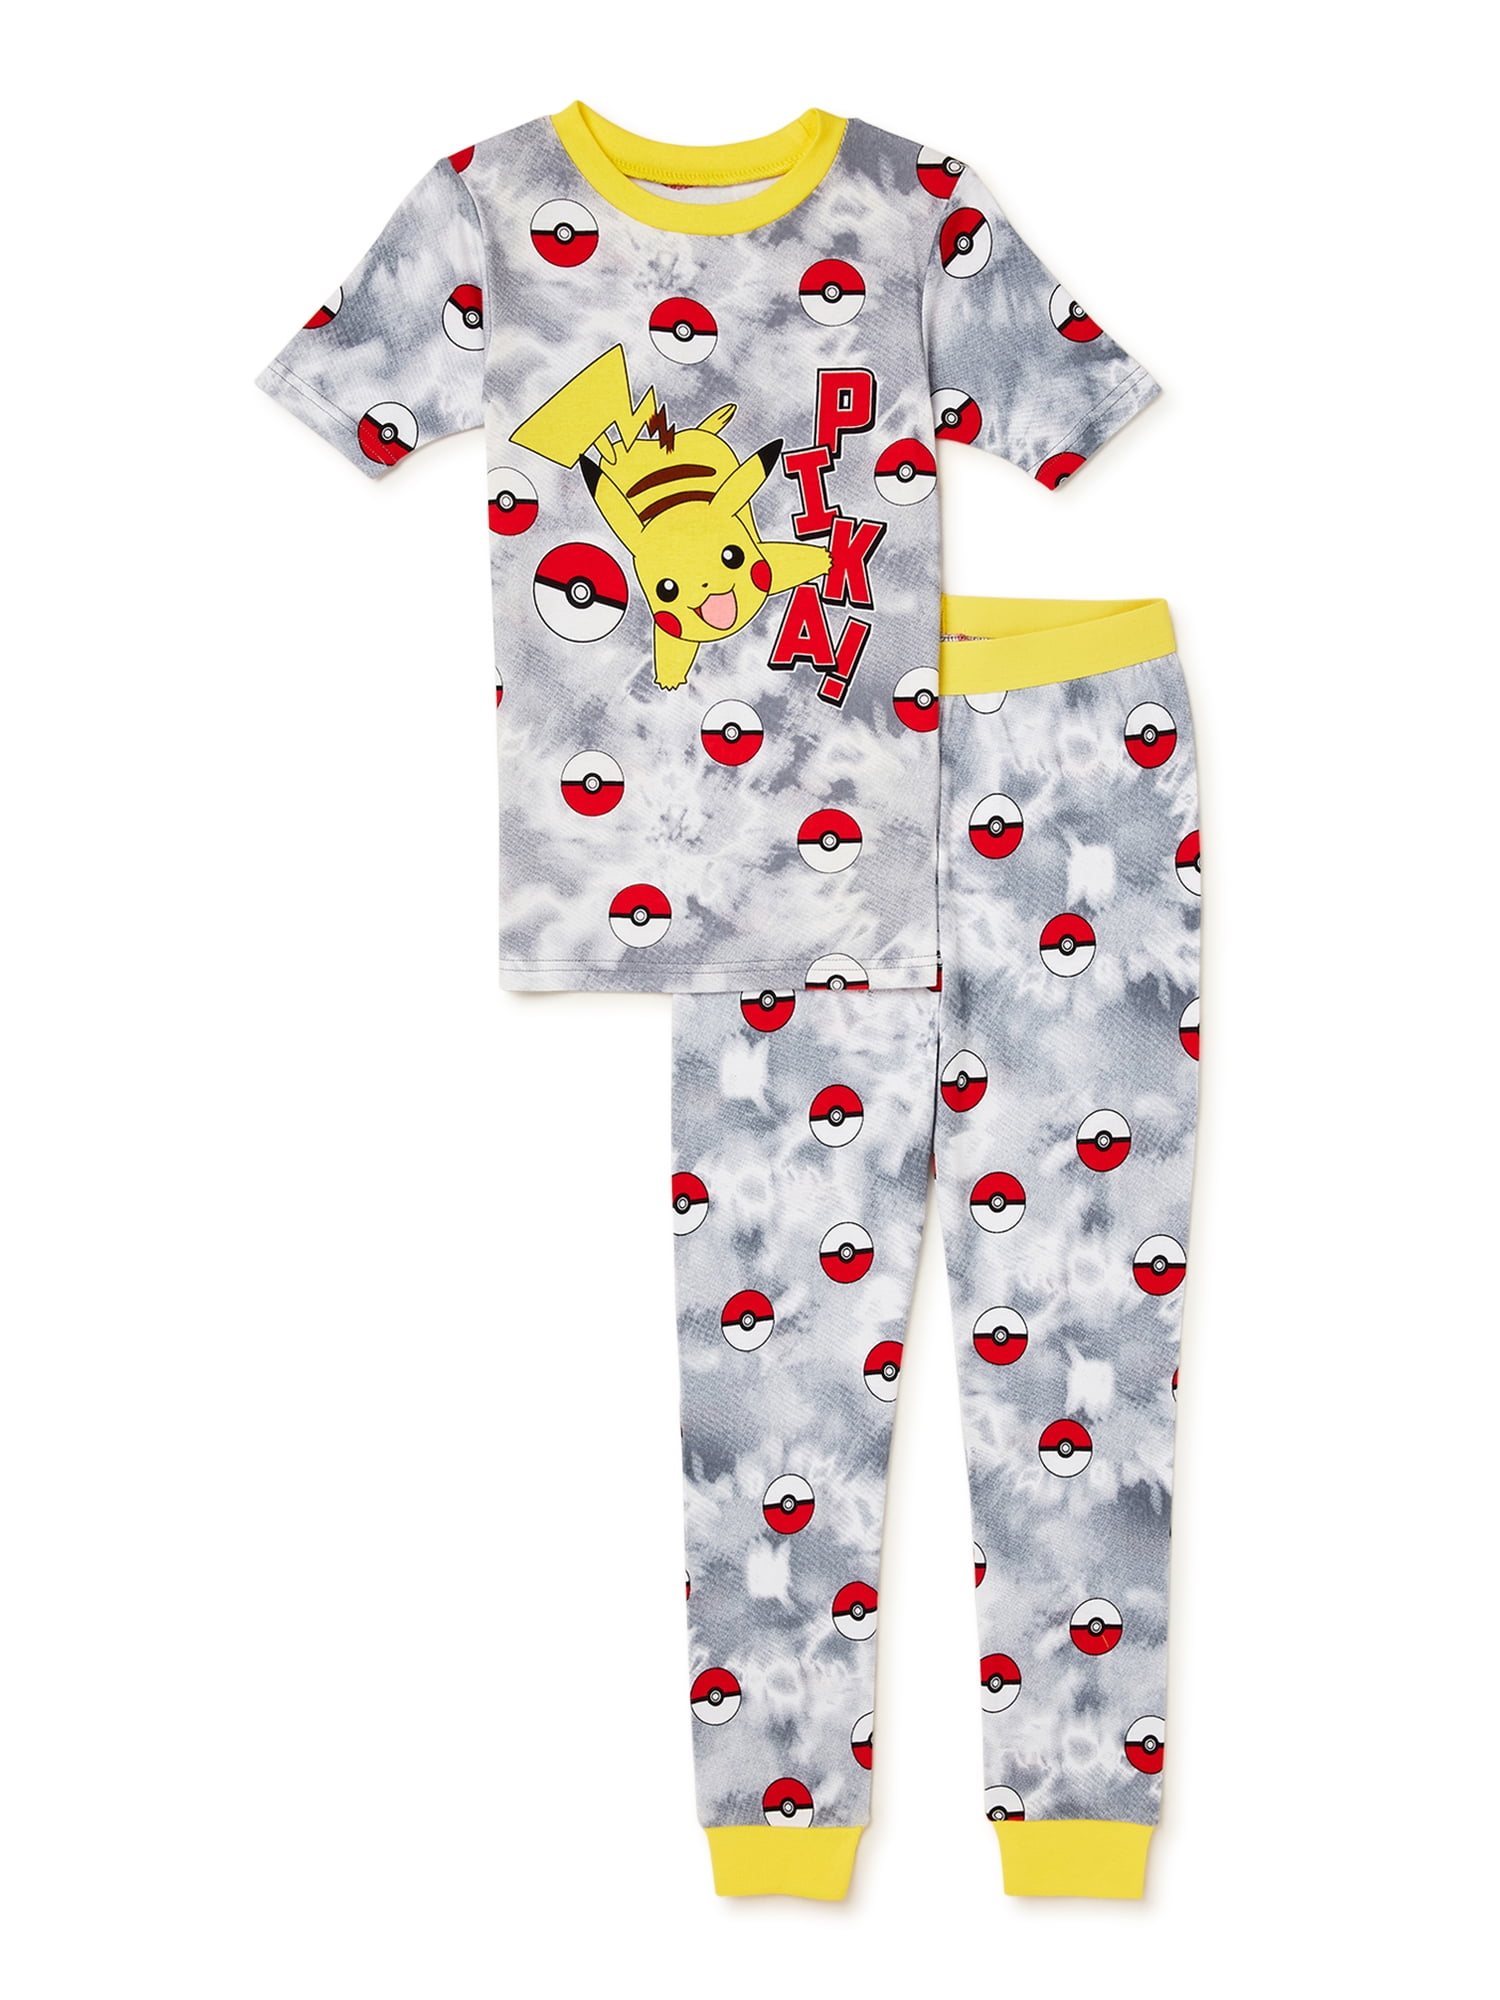 SpongeBob Squarepants Kids Pyjamas Snuggle Fit Boys Girls Full Length Pjs Set with Short Sleeve T-Shirt Unisex Gift 